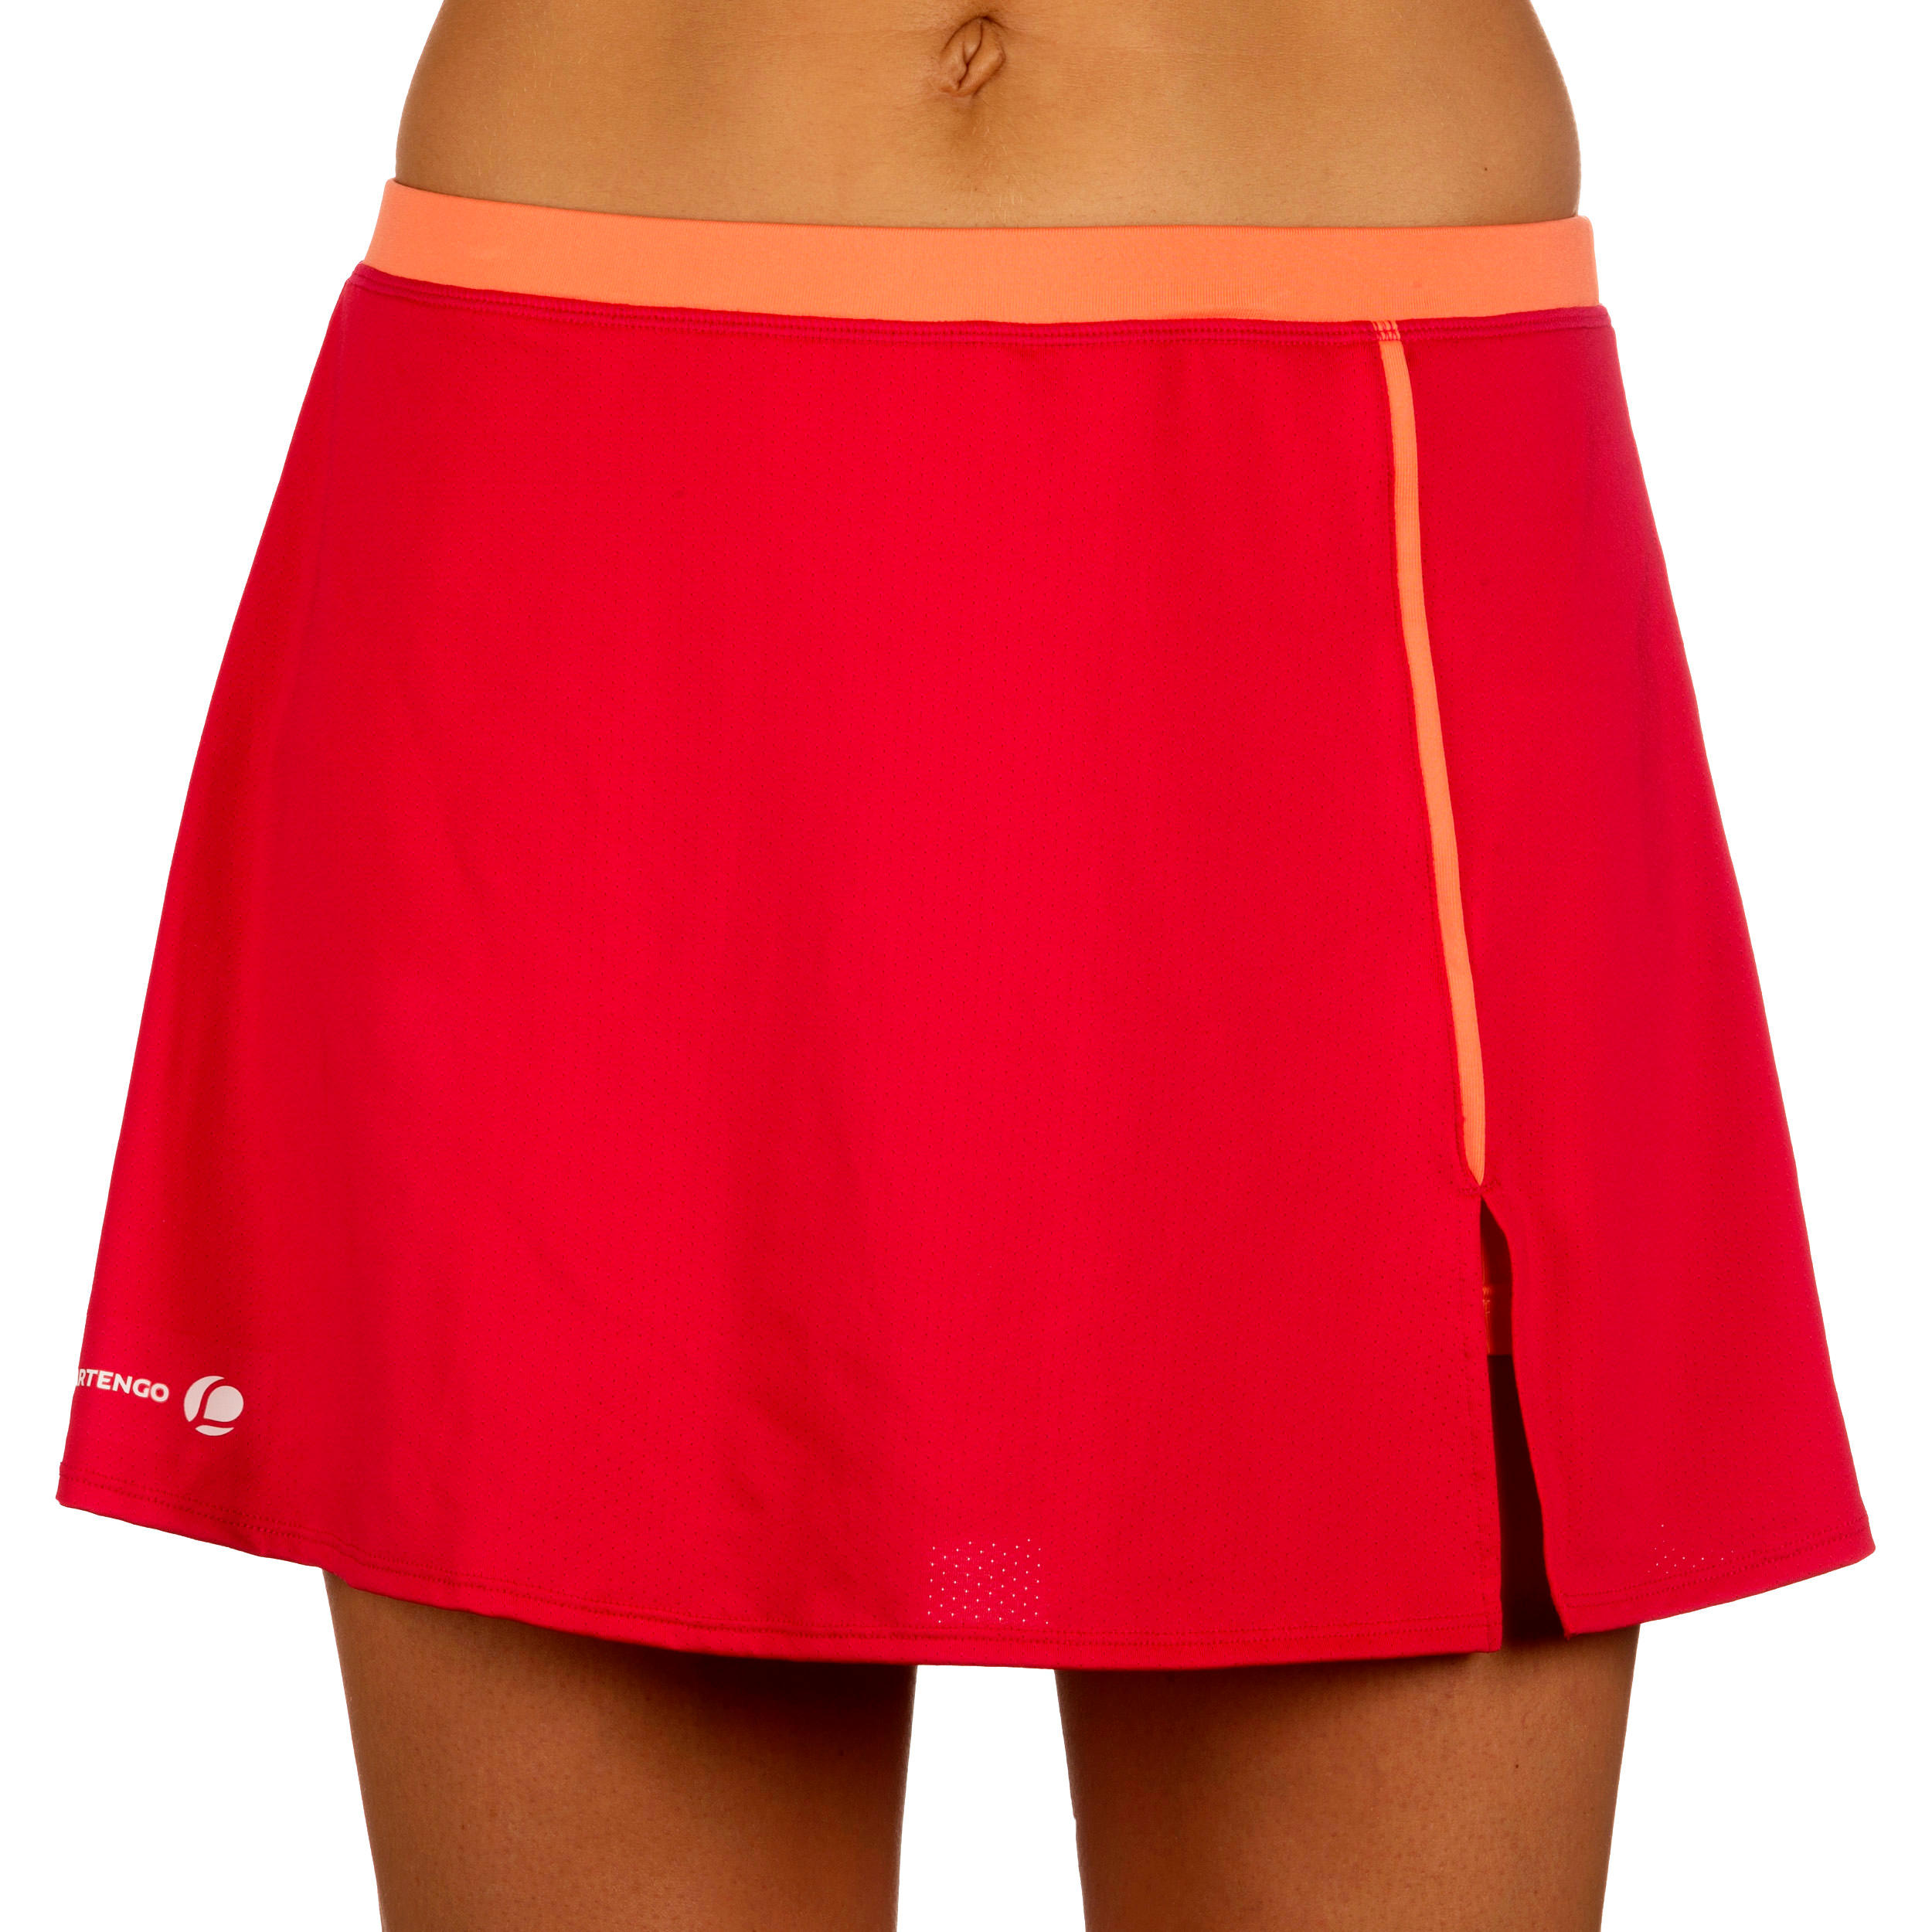 Soft Women's Tennis Badminton Table Tennis Squash Padel Skirt - Pink/Orange 1/6